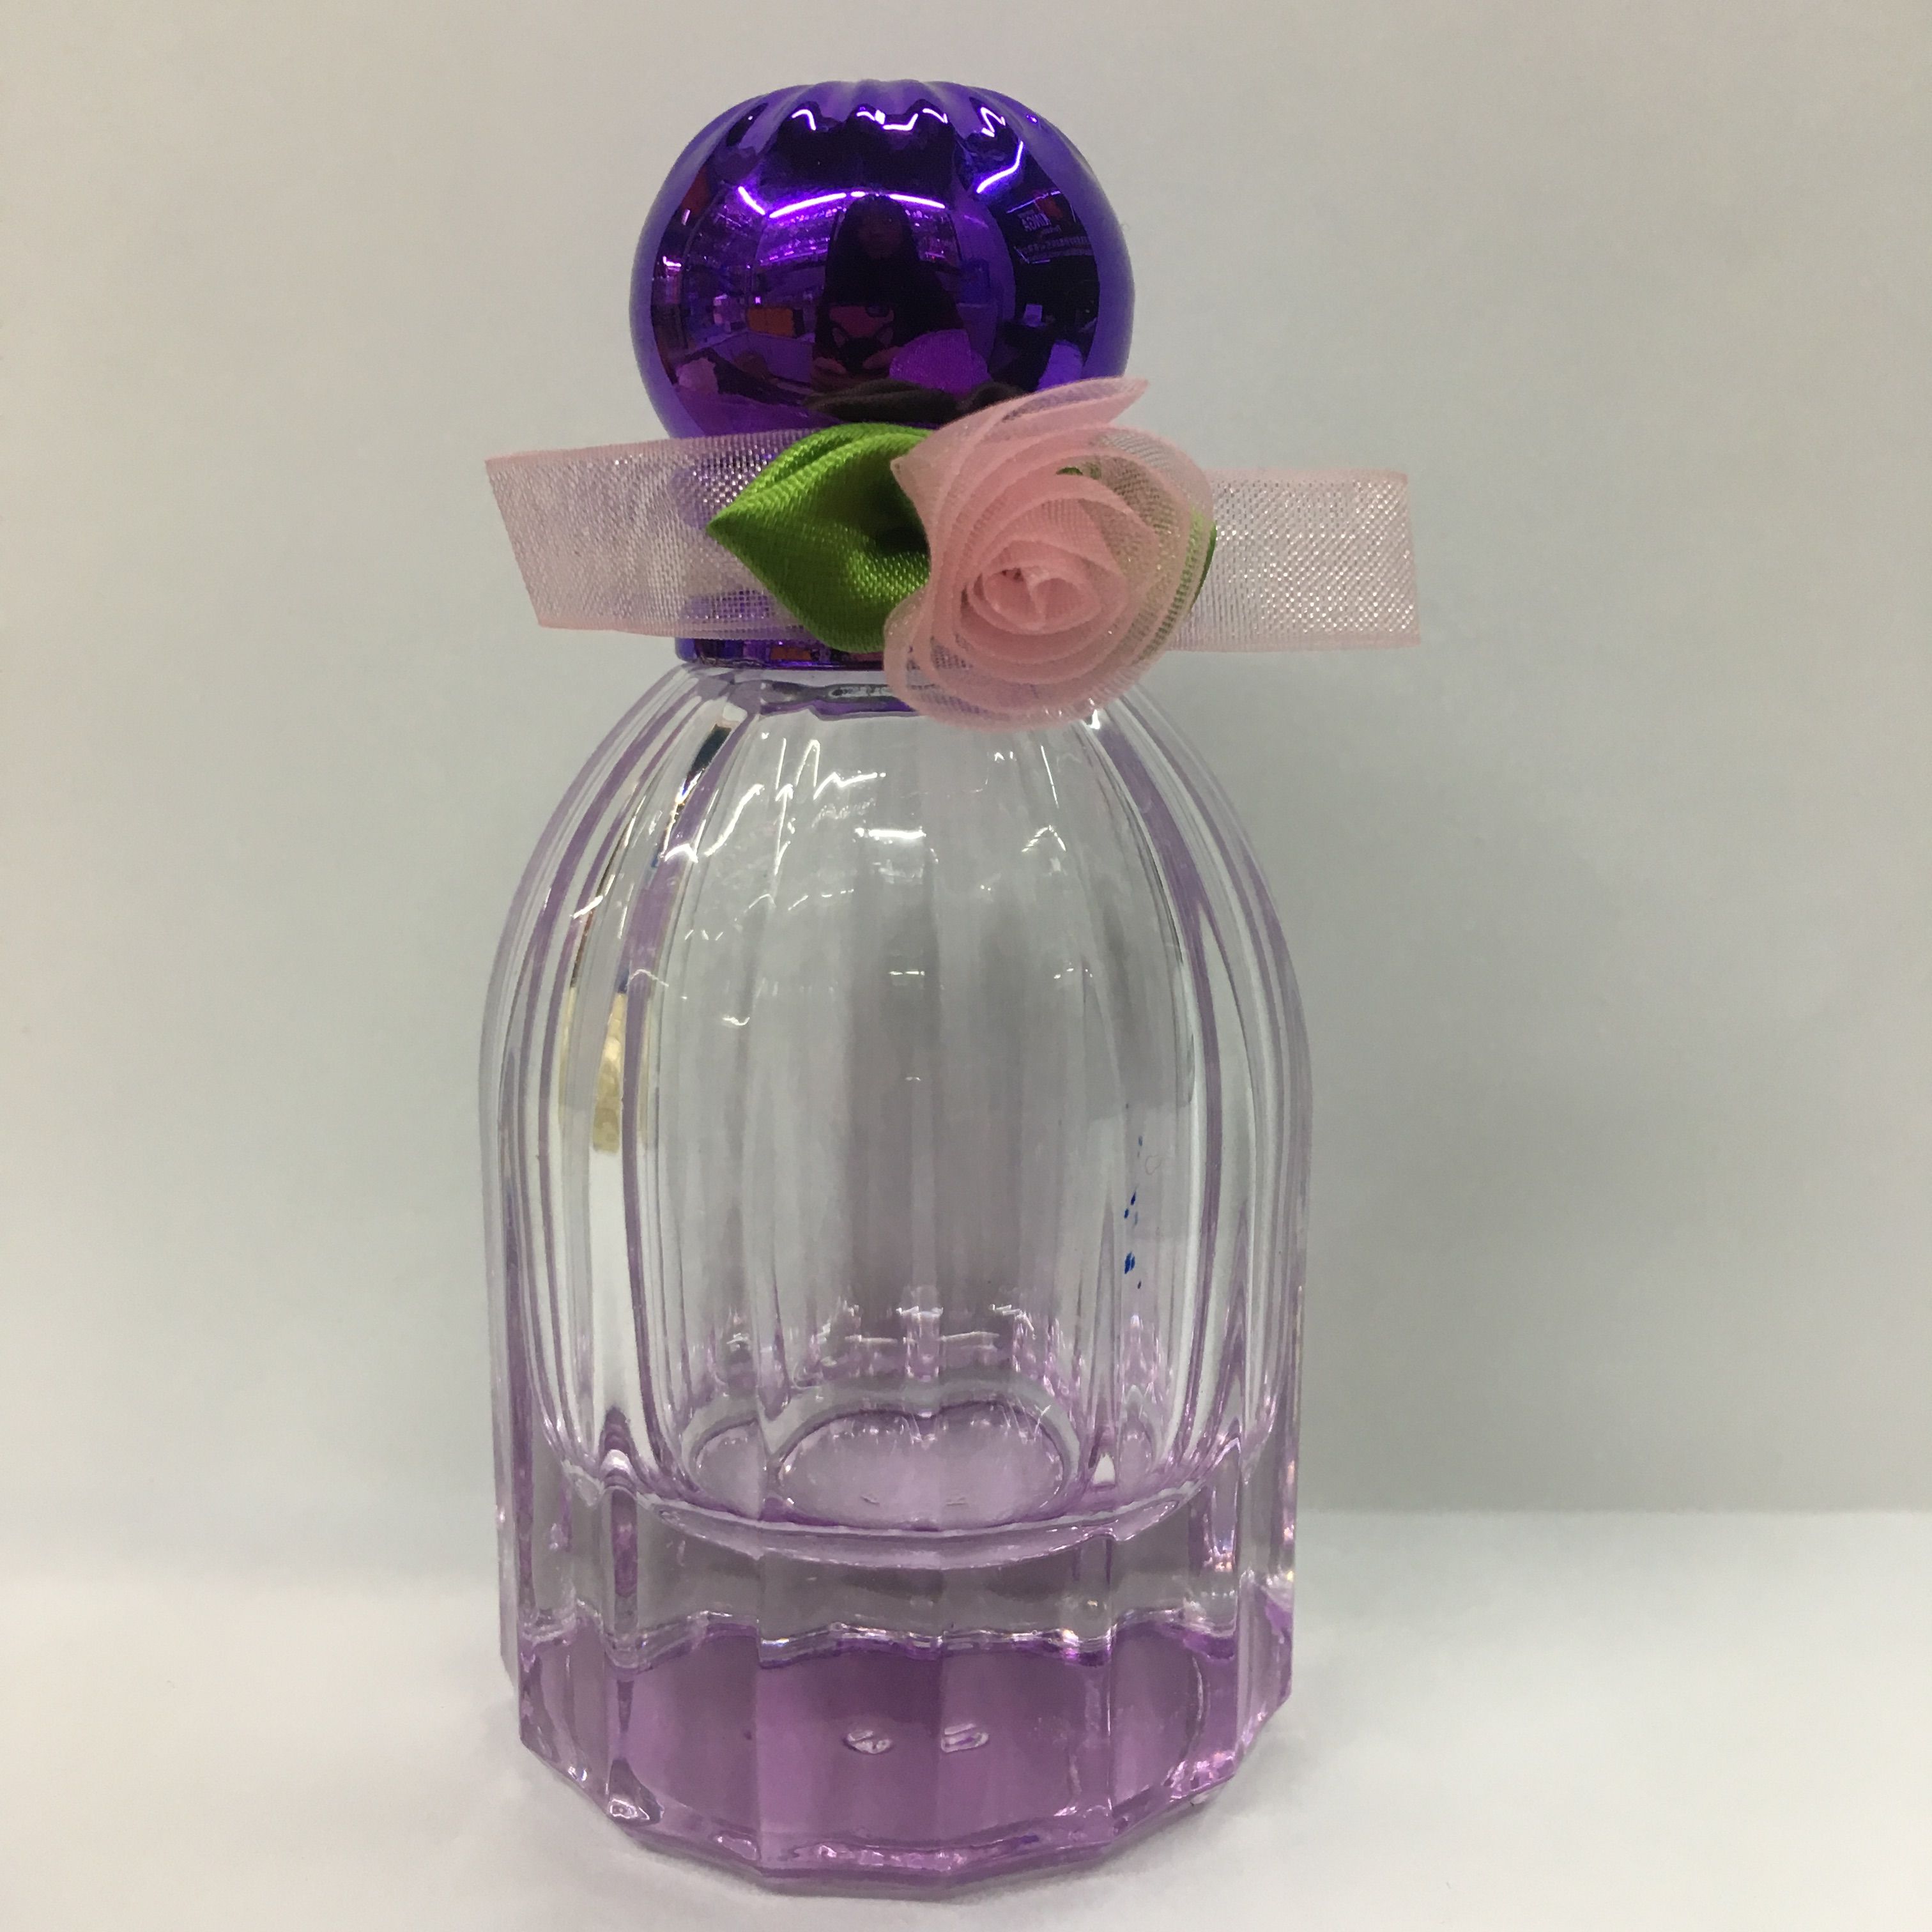 30ml带花朵玻璃香水瓶紫色雅致清新香水分装瓶